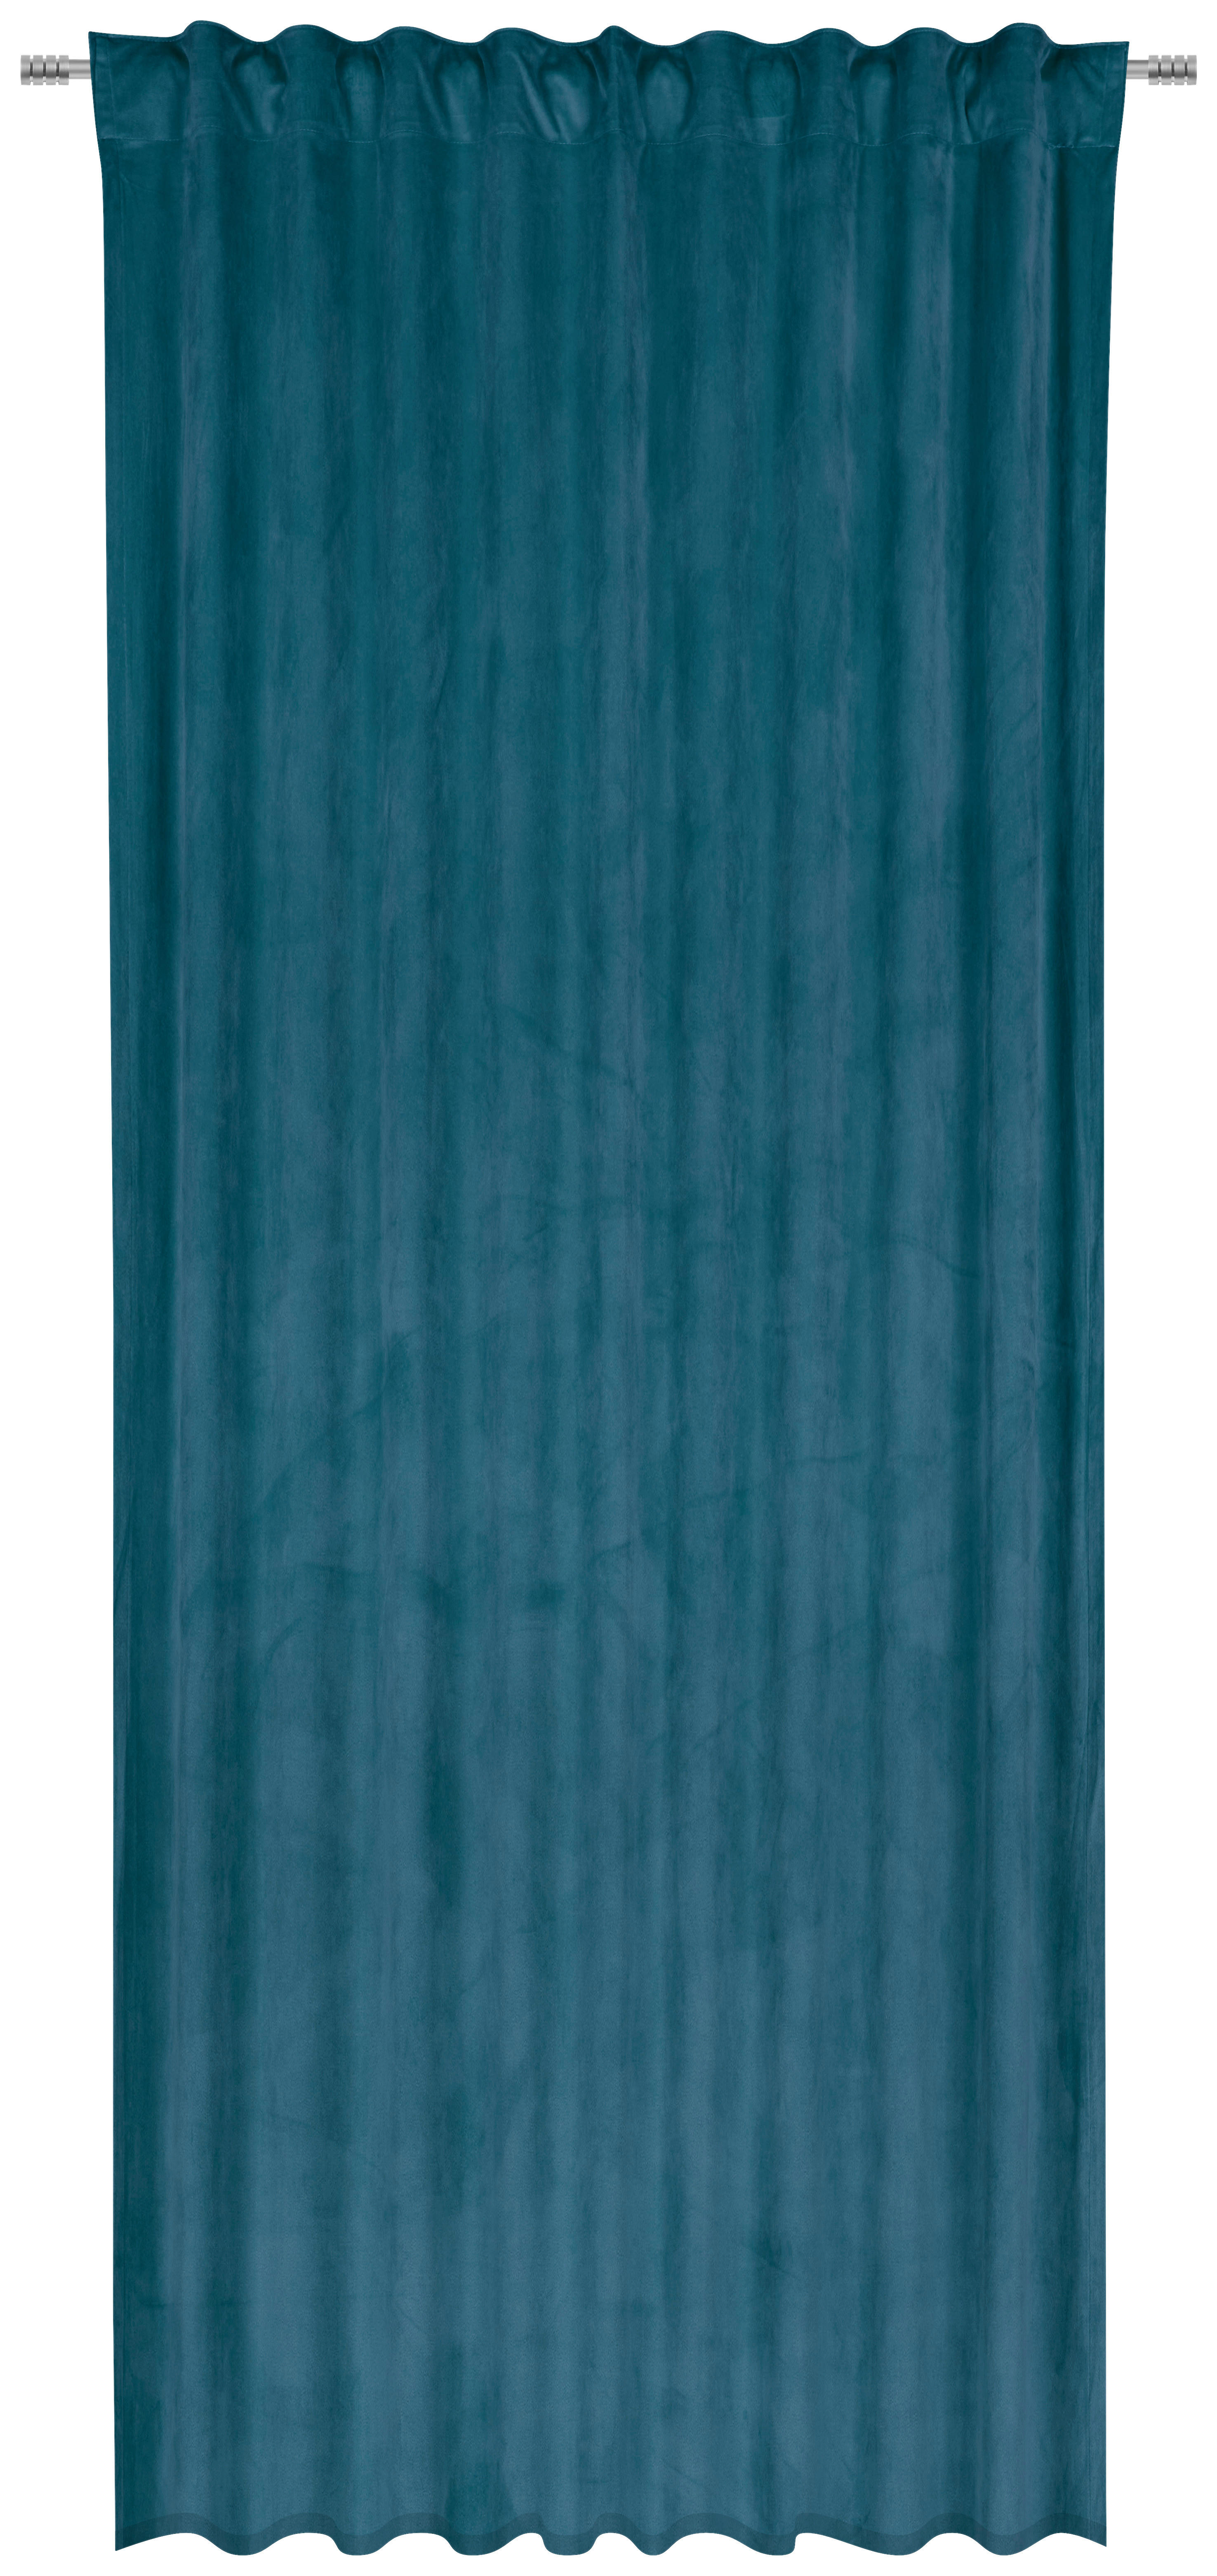 FERTIGVORHANG ZENATO blickdicht 135/245 cm   - Petrol, KONVENTIONELL, Textil (135/245cm) - Ambiente